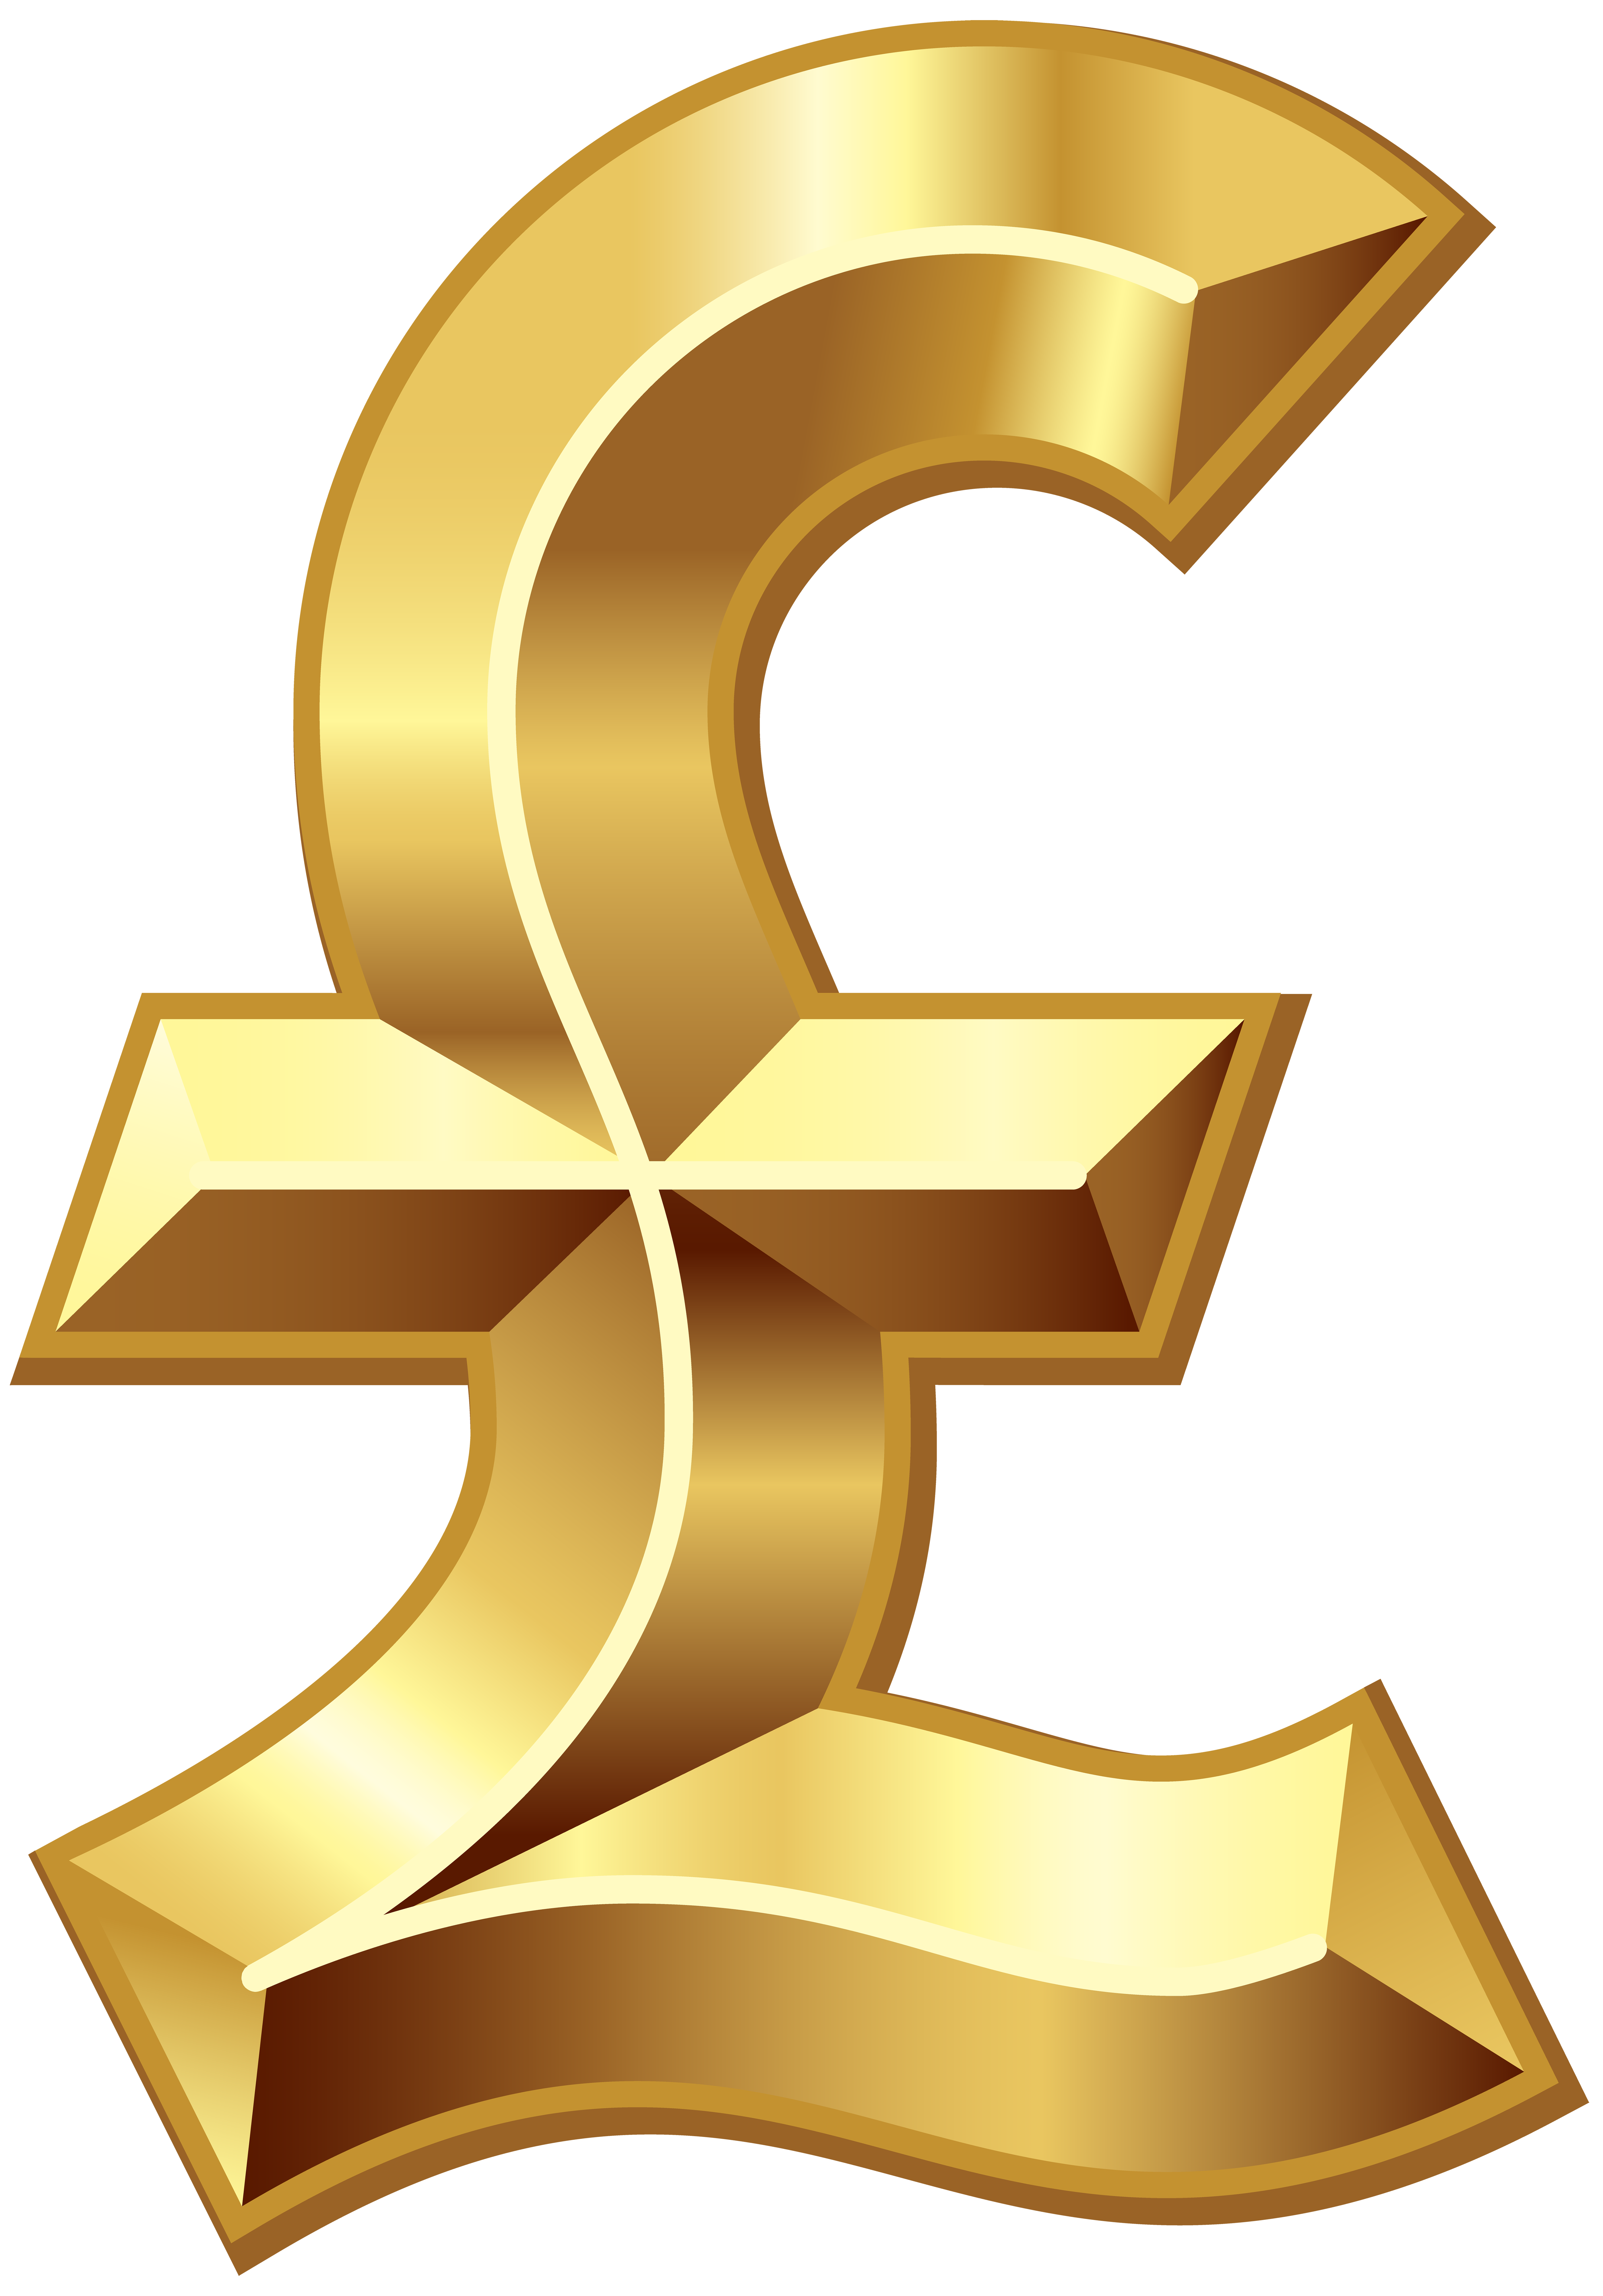 Sterling Pound Symbol Dollar British Sign Currency PNG Image